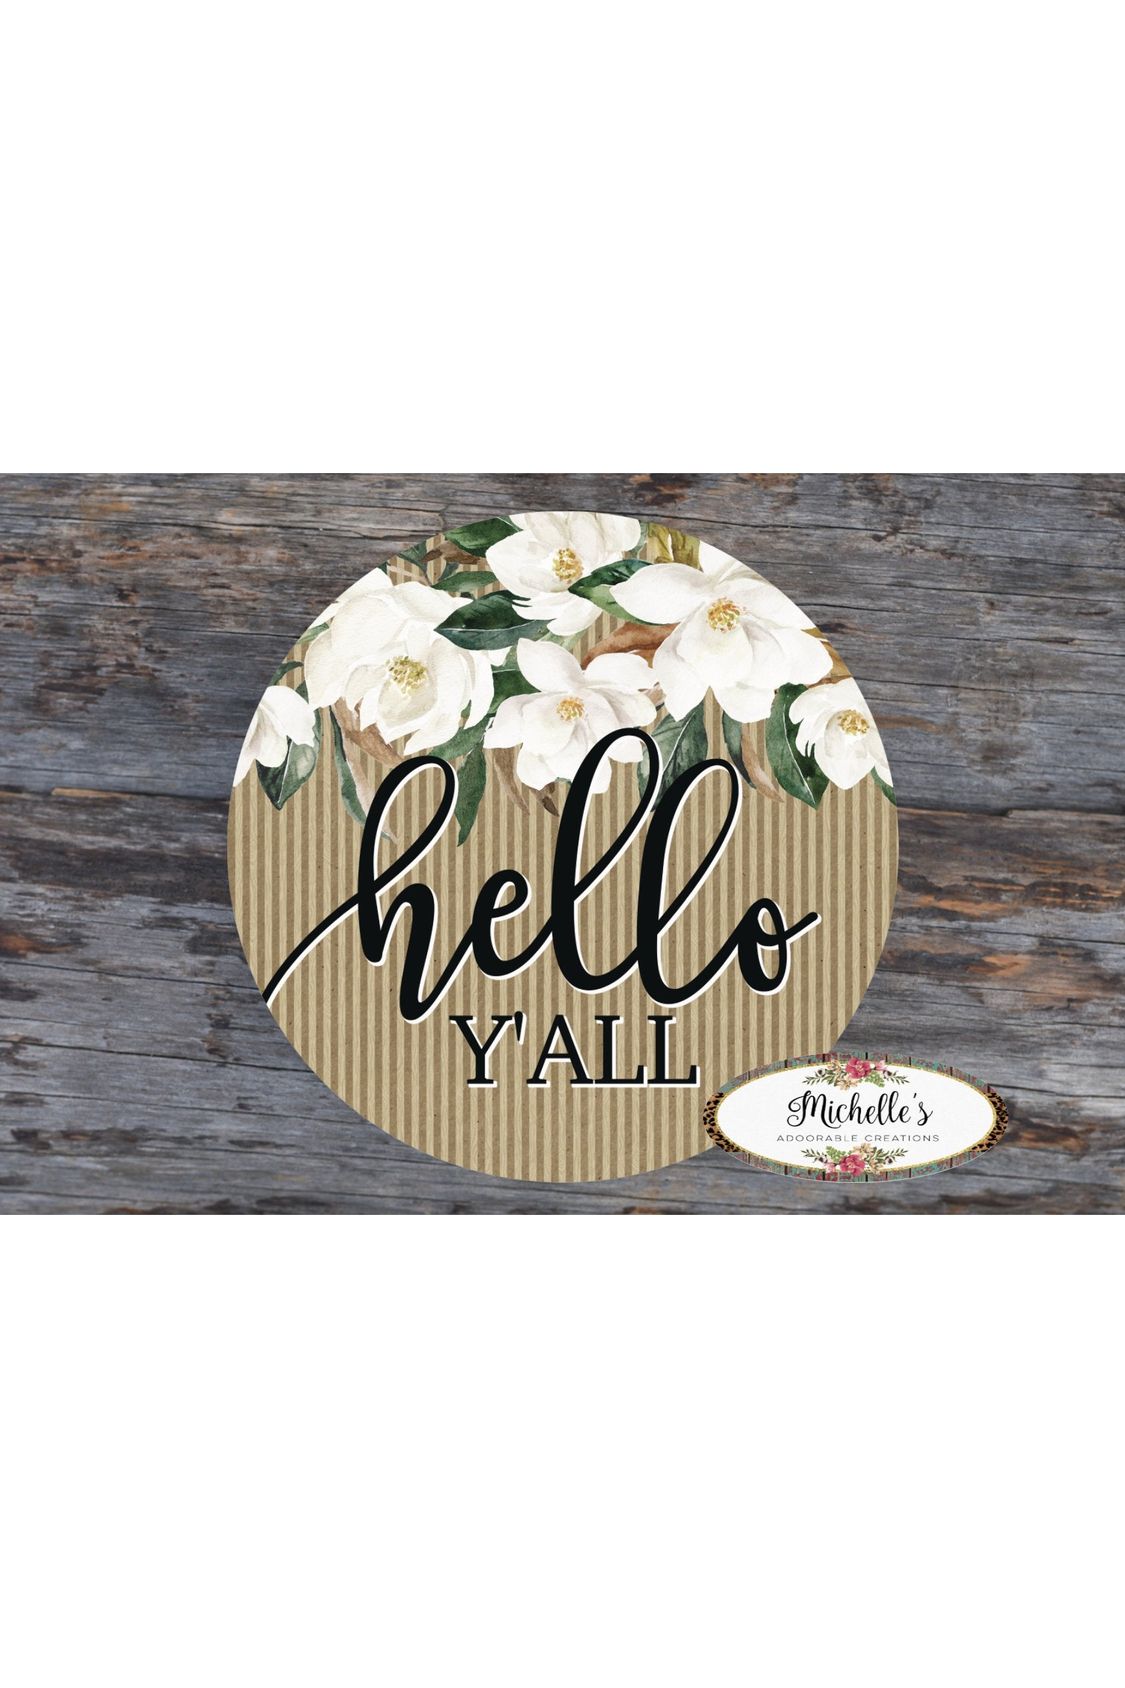 Shop For Magnolia Hello Yall Sign - Wreath Enhancement